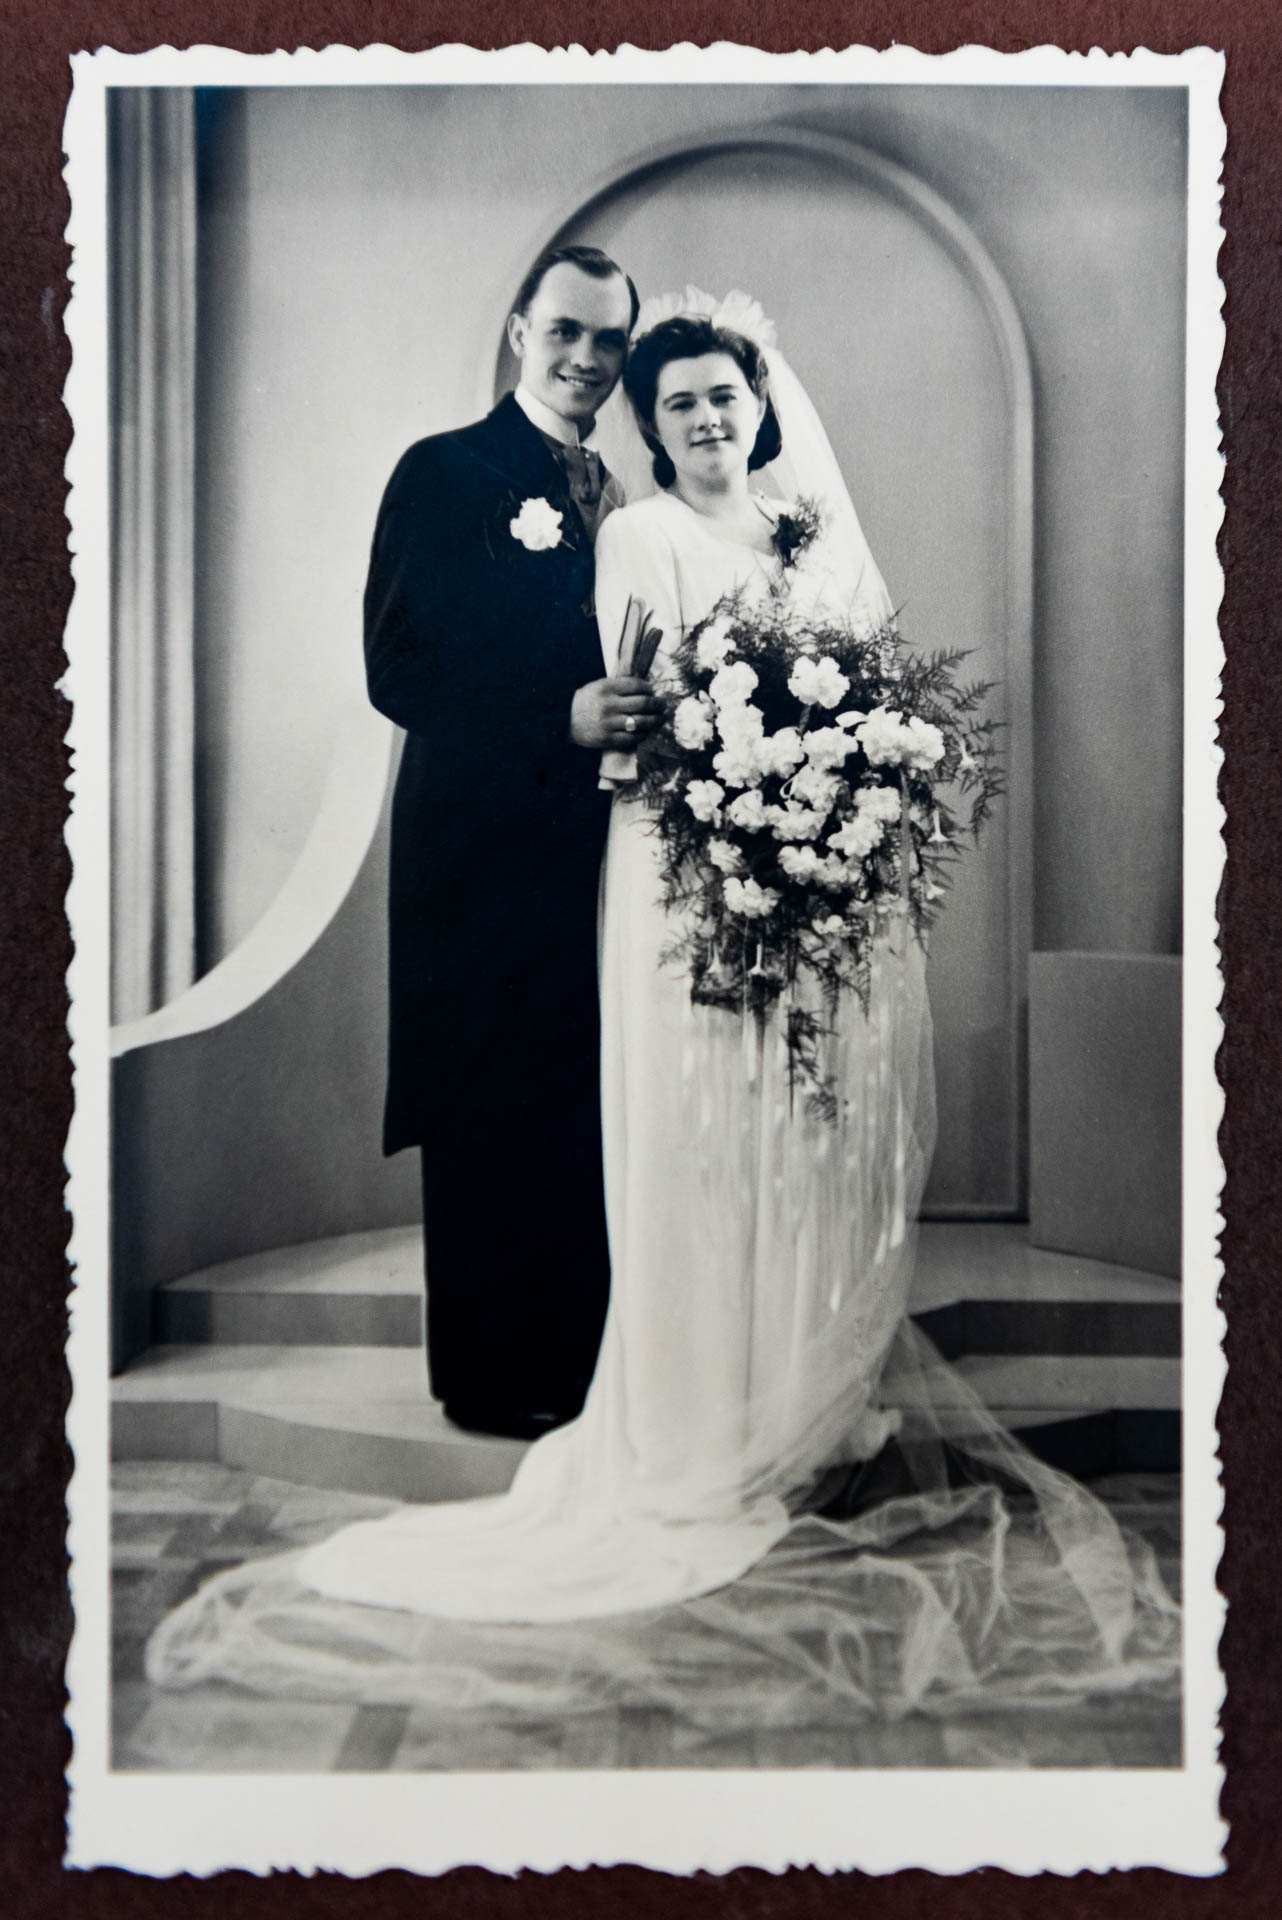 Bridal photo when platinum red coral brilliant wedding 70 years ago | Echtpaar Hesterman-Karmelk | Portrait Photographer Michiel Borgart - Forever Images.